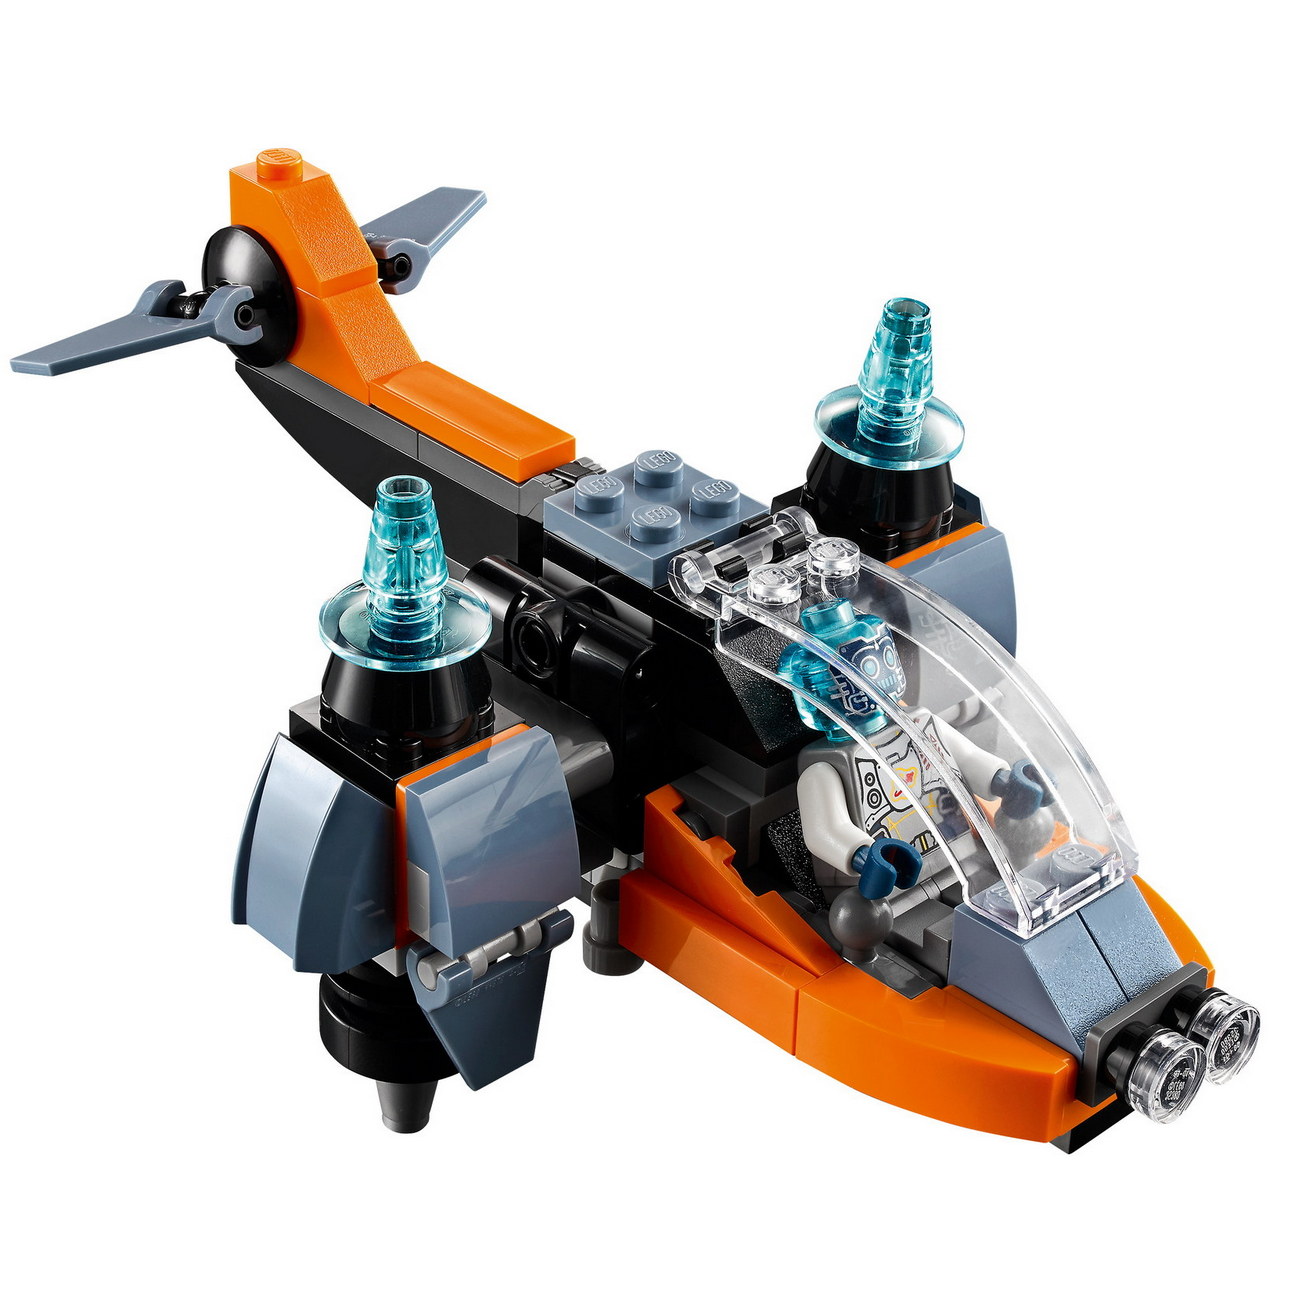 LEGO Creator 31111 - Cyber-Drohne